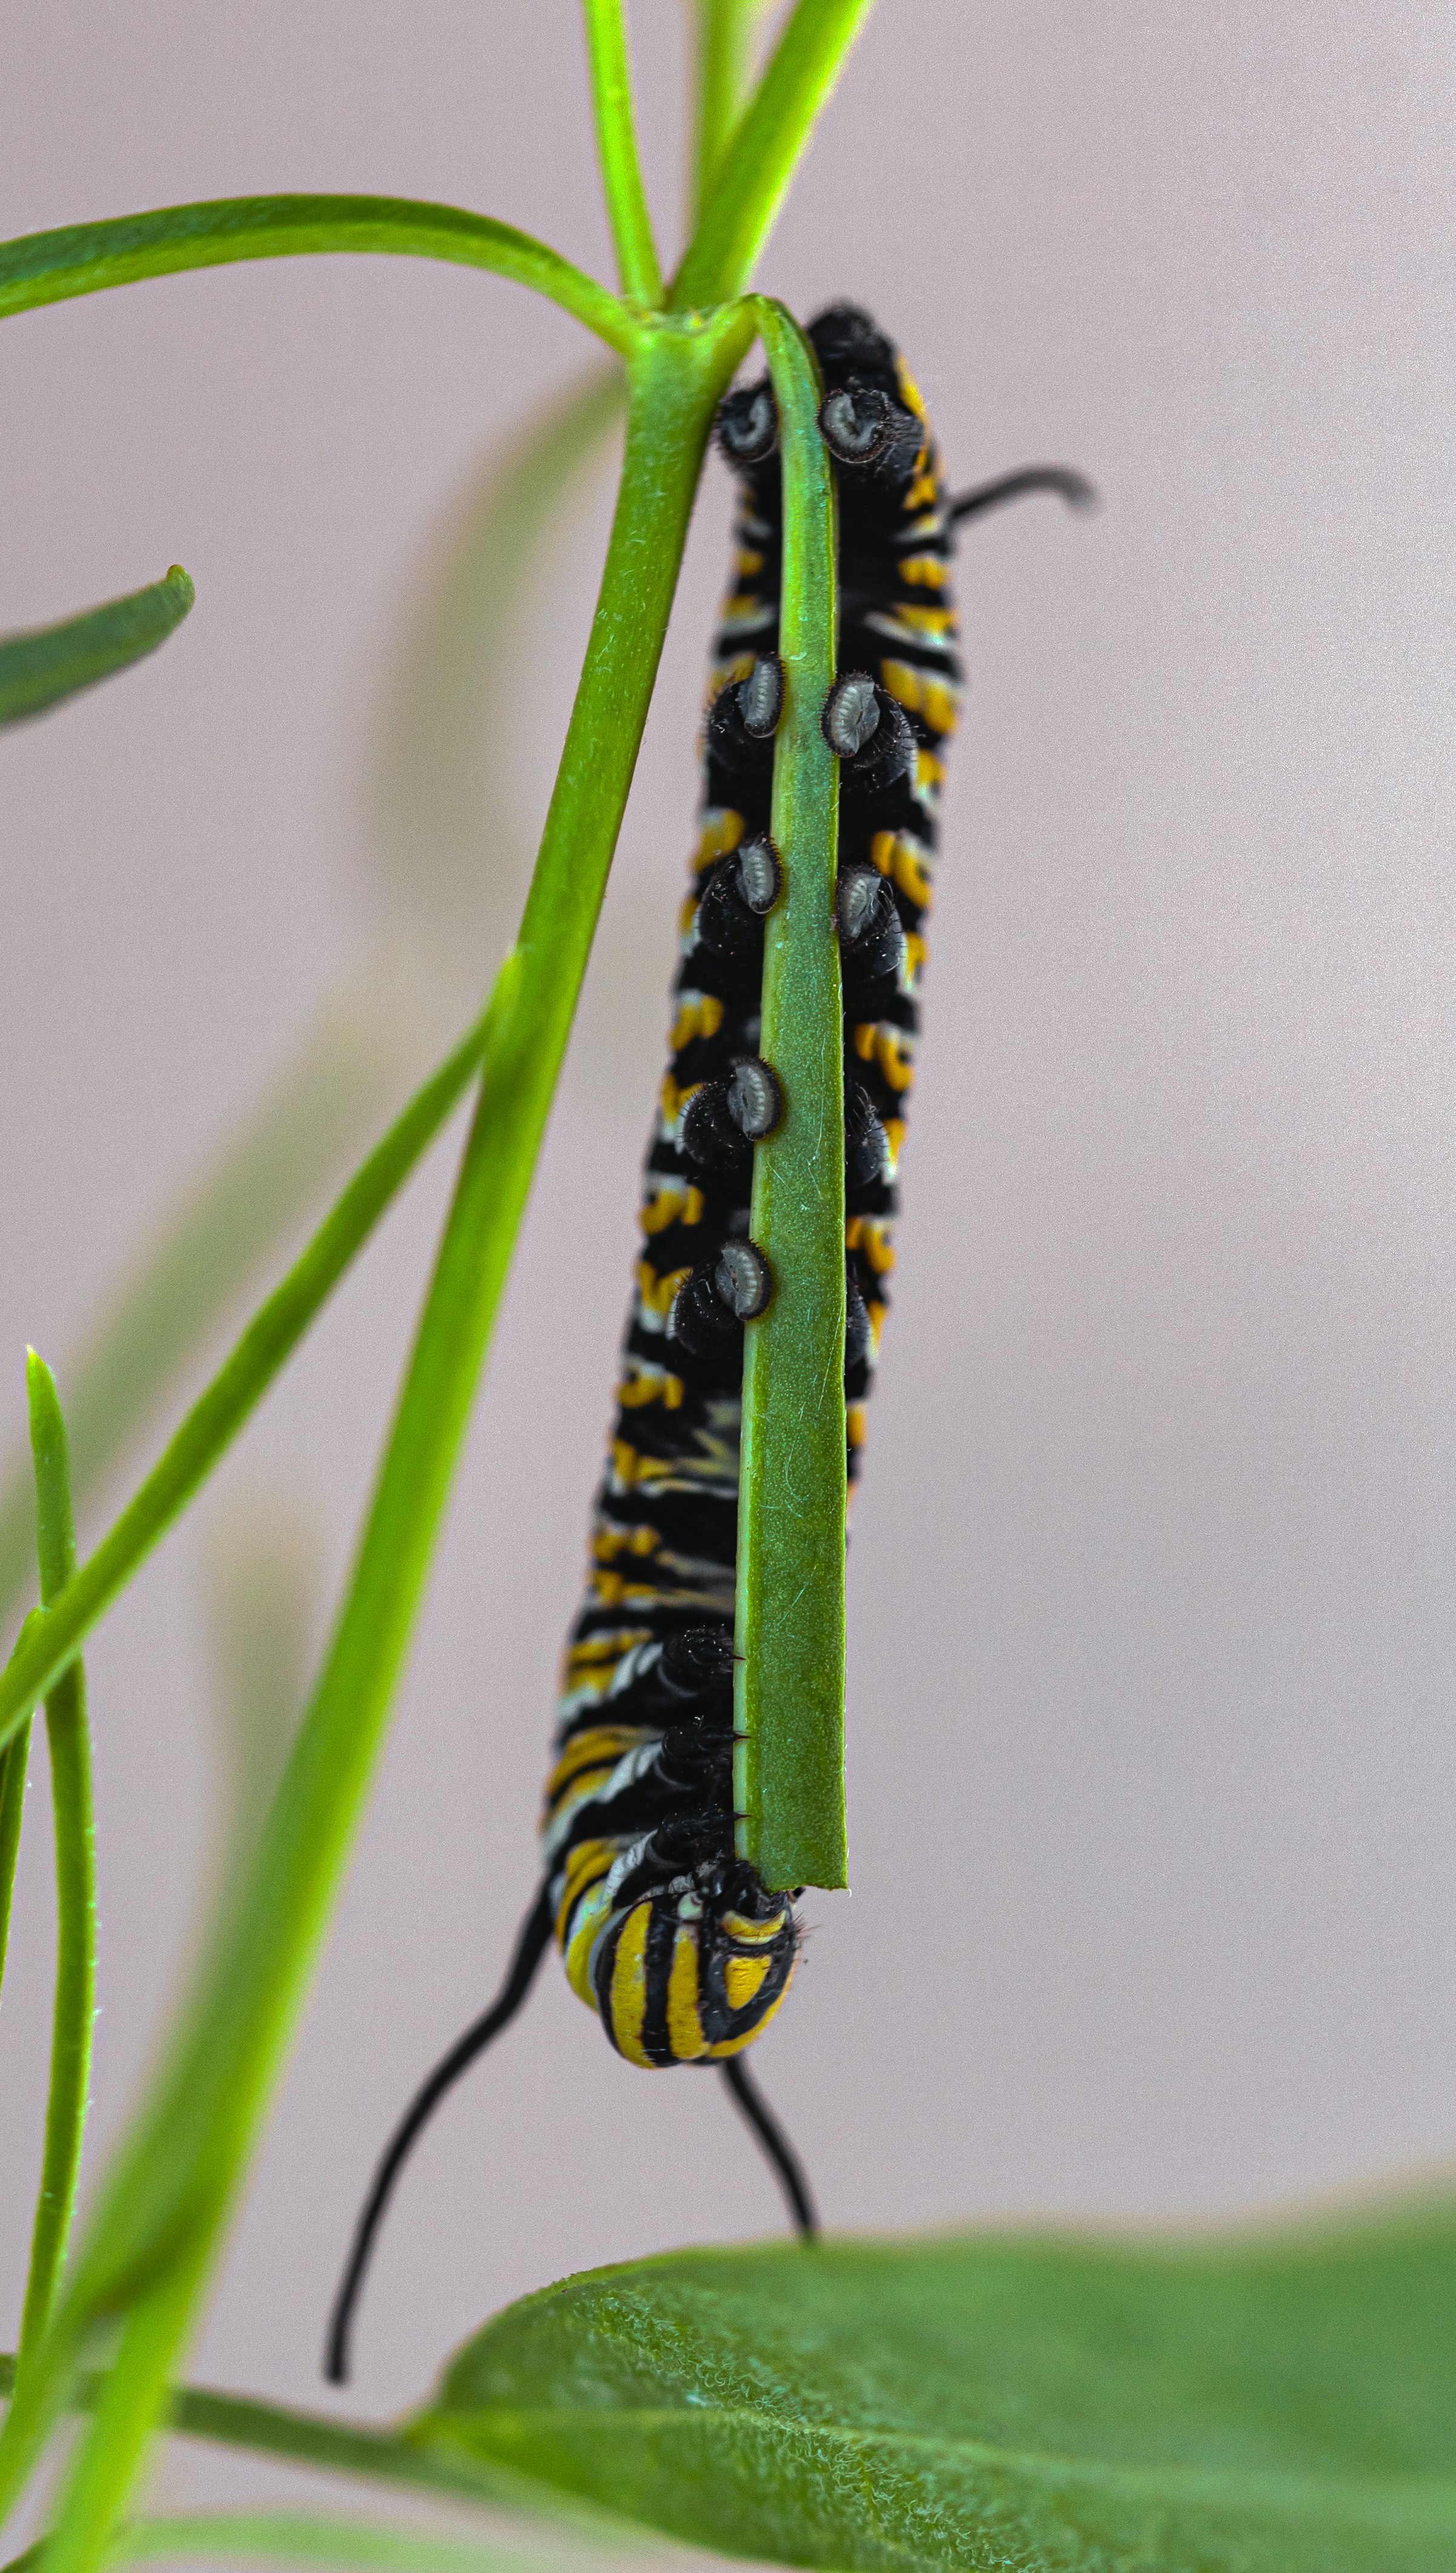 black and yellow caterpillar on green stem